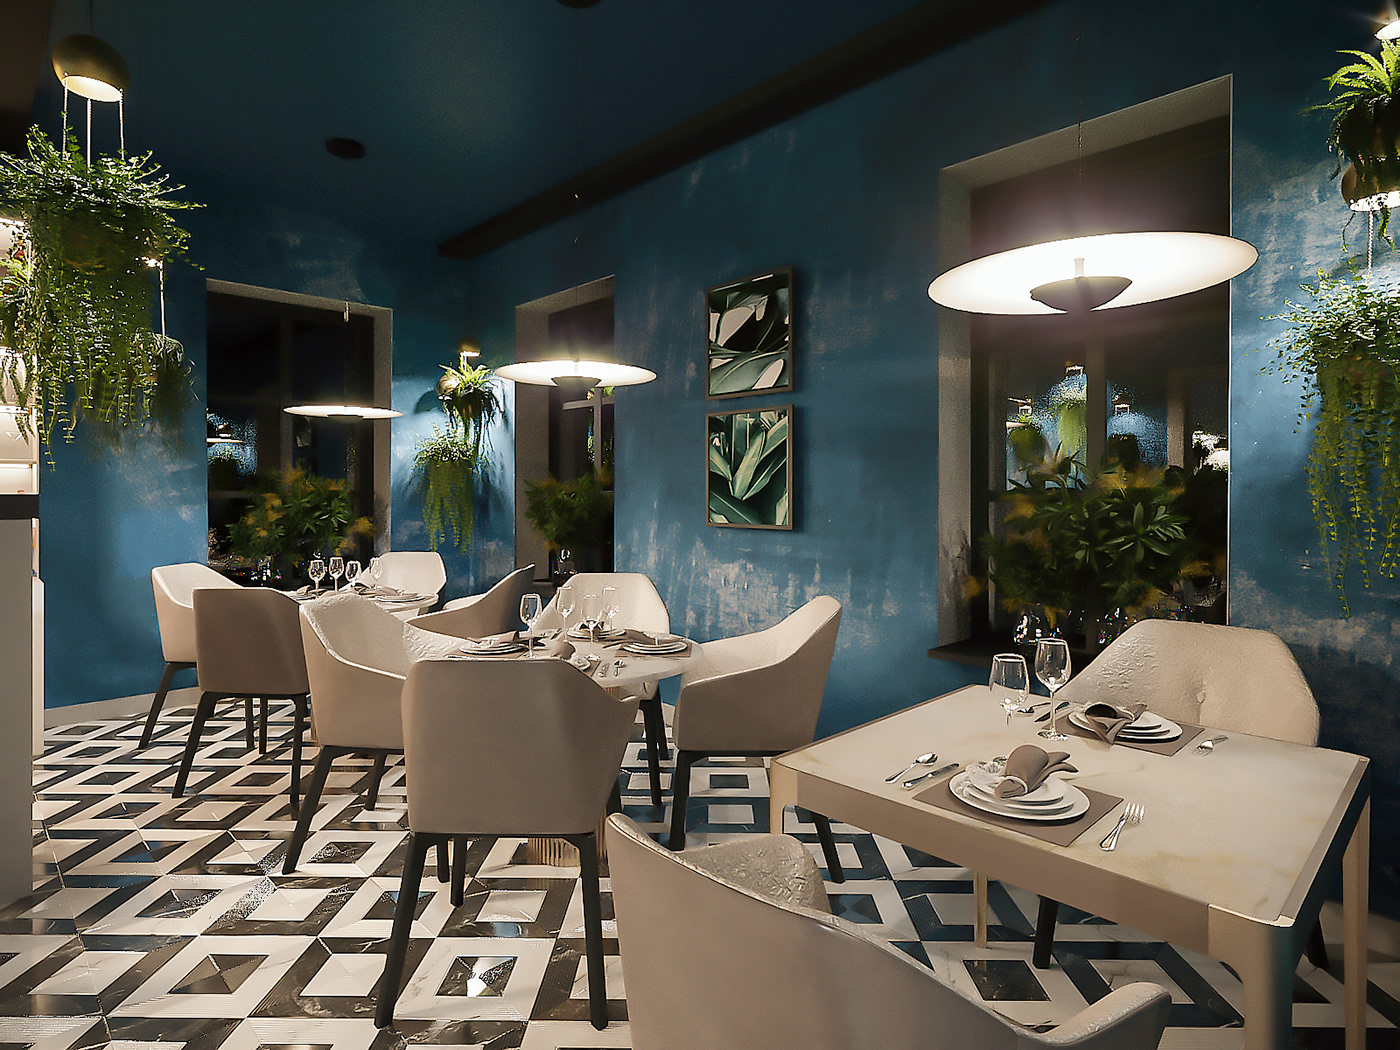 3dsmax cafe corona design Interior